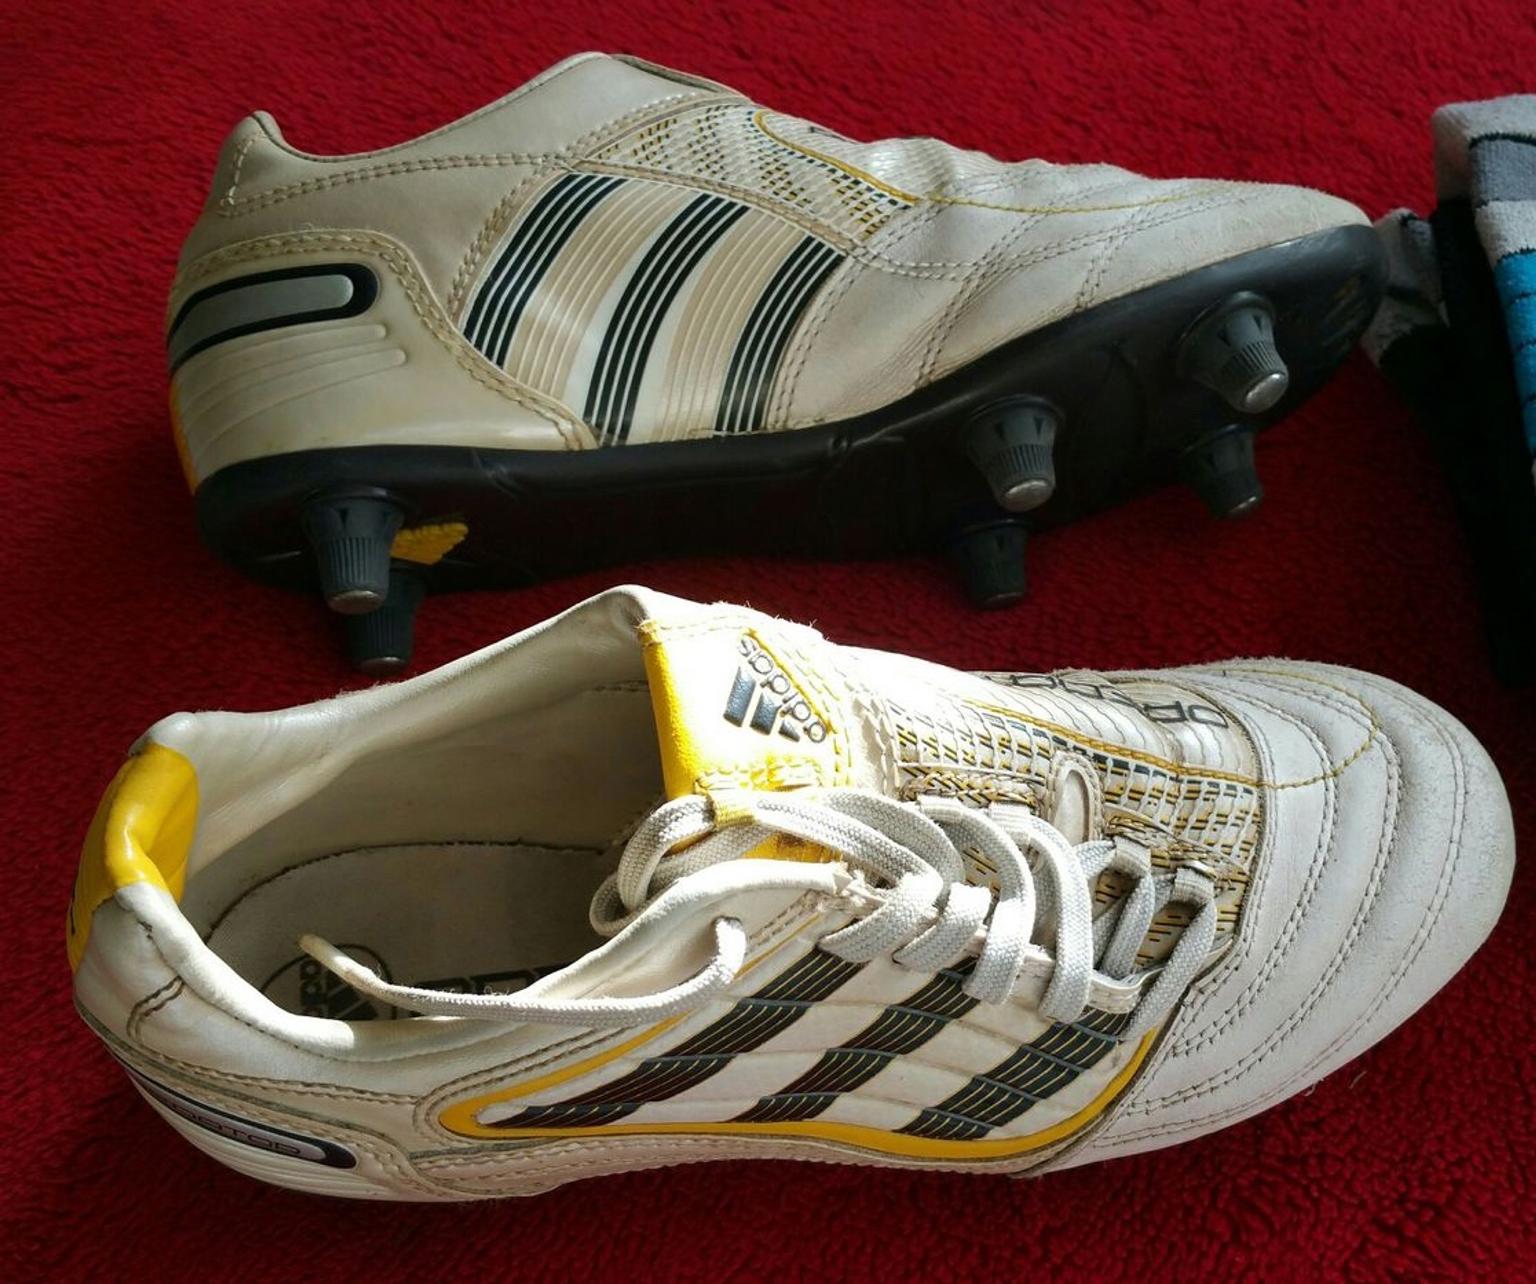 gold adidas predator football boots